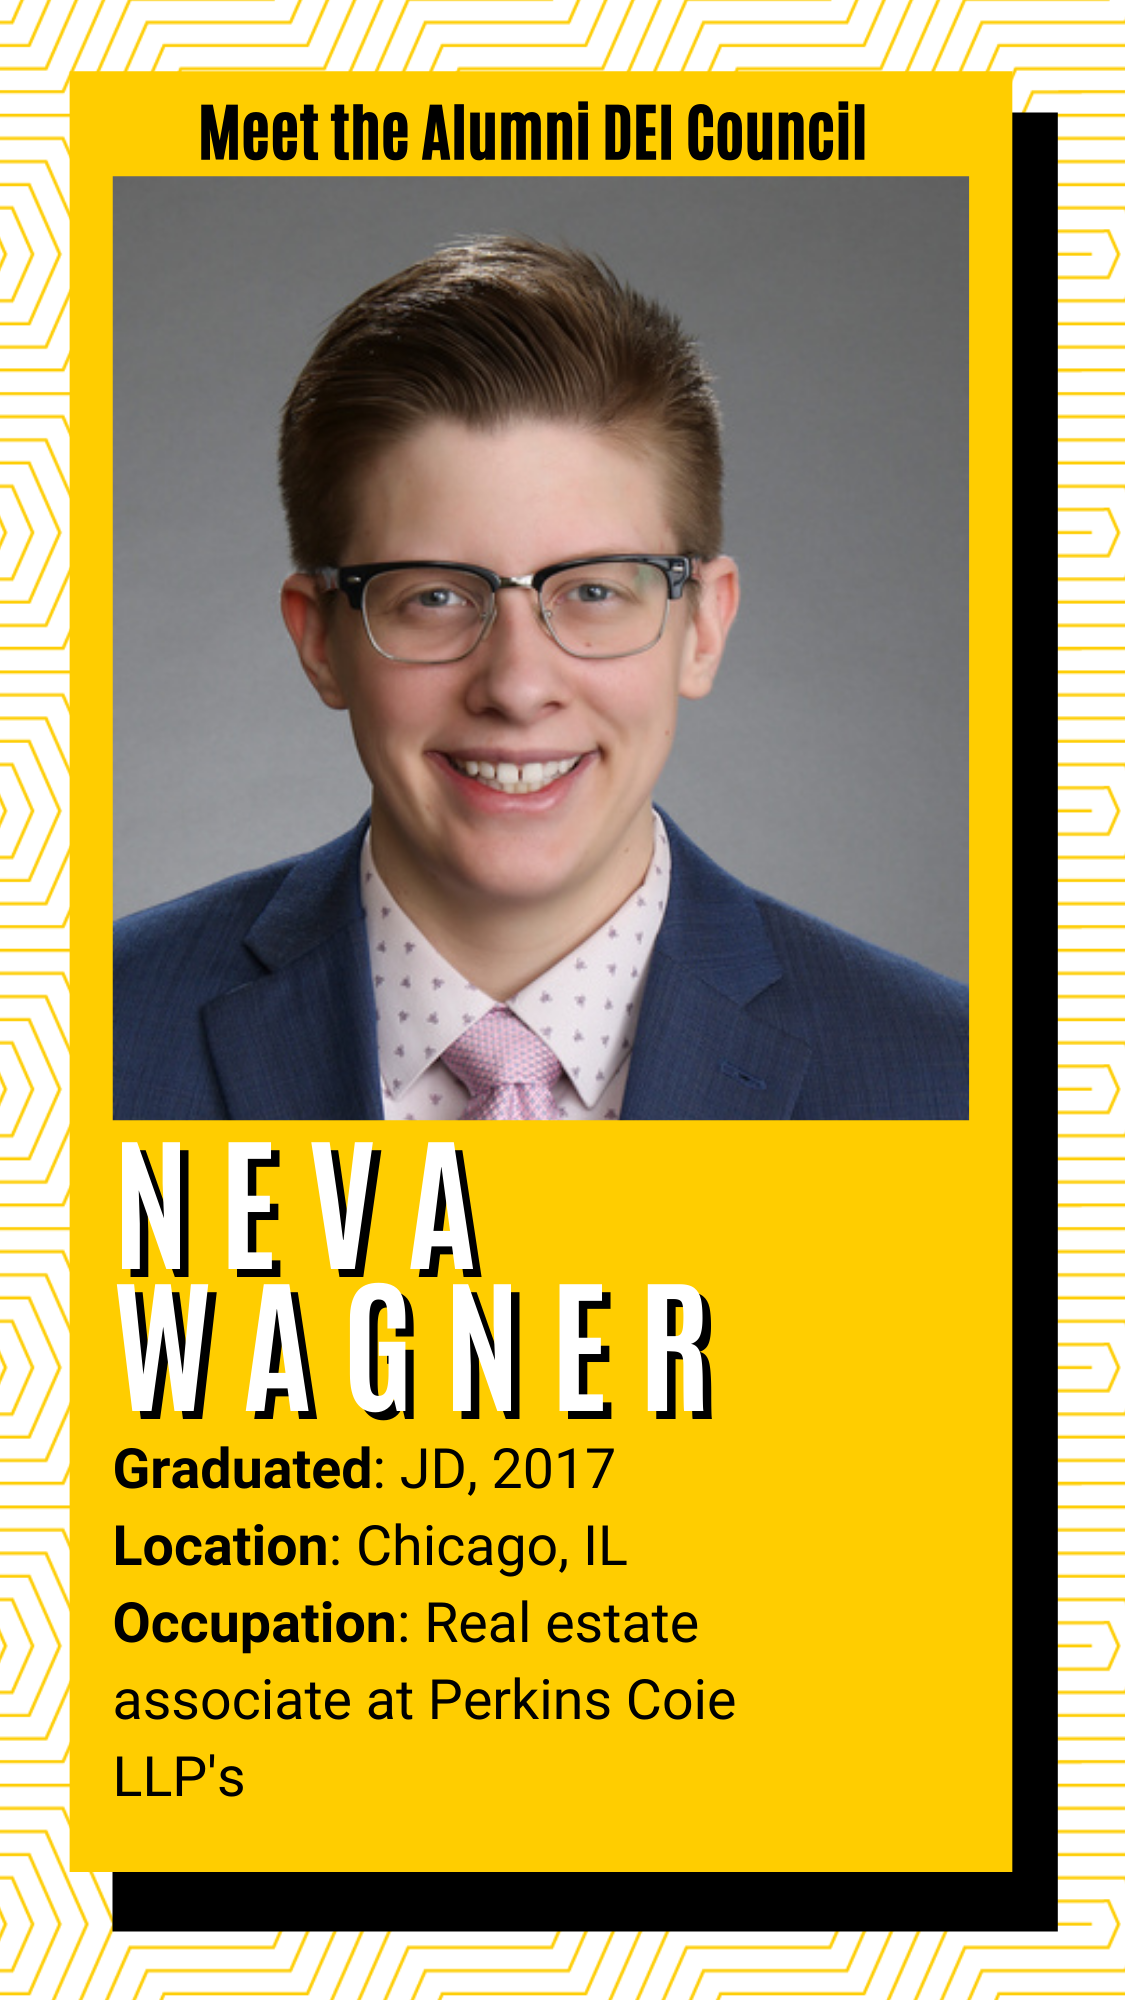 Meet the alumni DEI Council - Neva Wagner